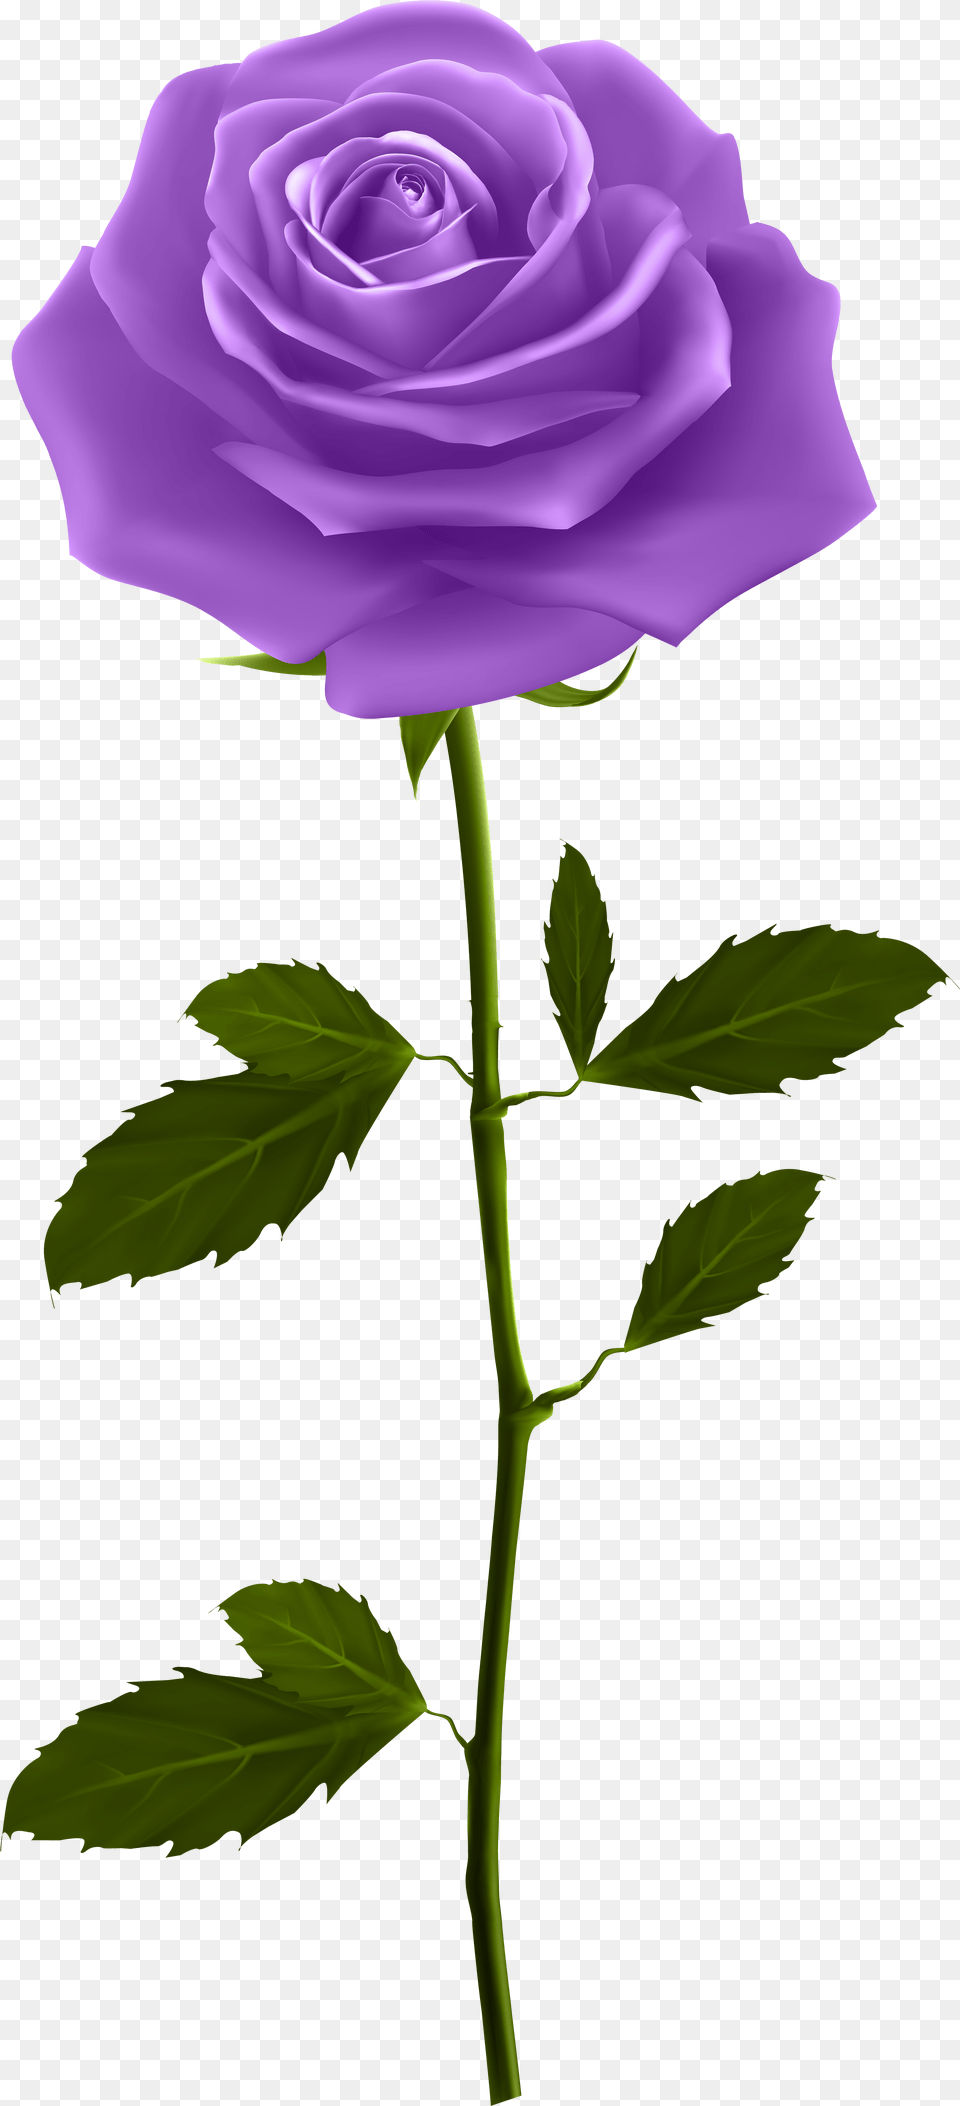 Purple Rose Roses Cartoon With Stem Clip Art Purple Rose With Stem, Flower, Plant Png Image